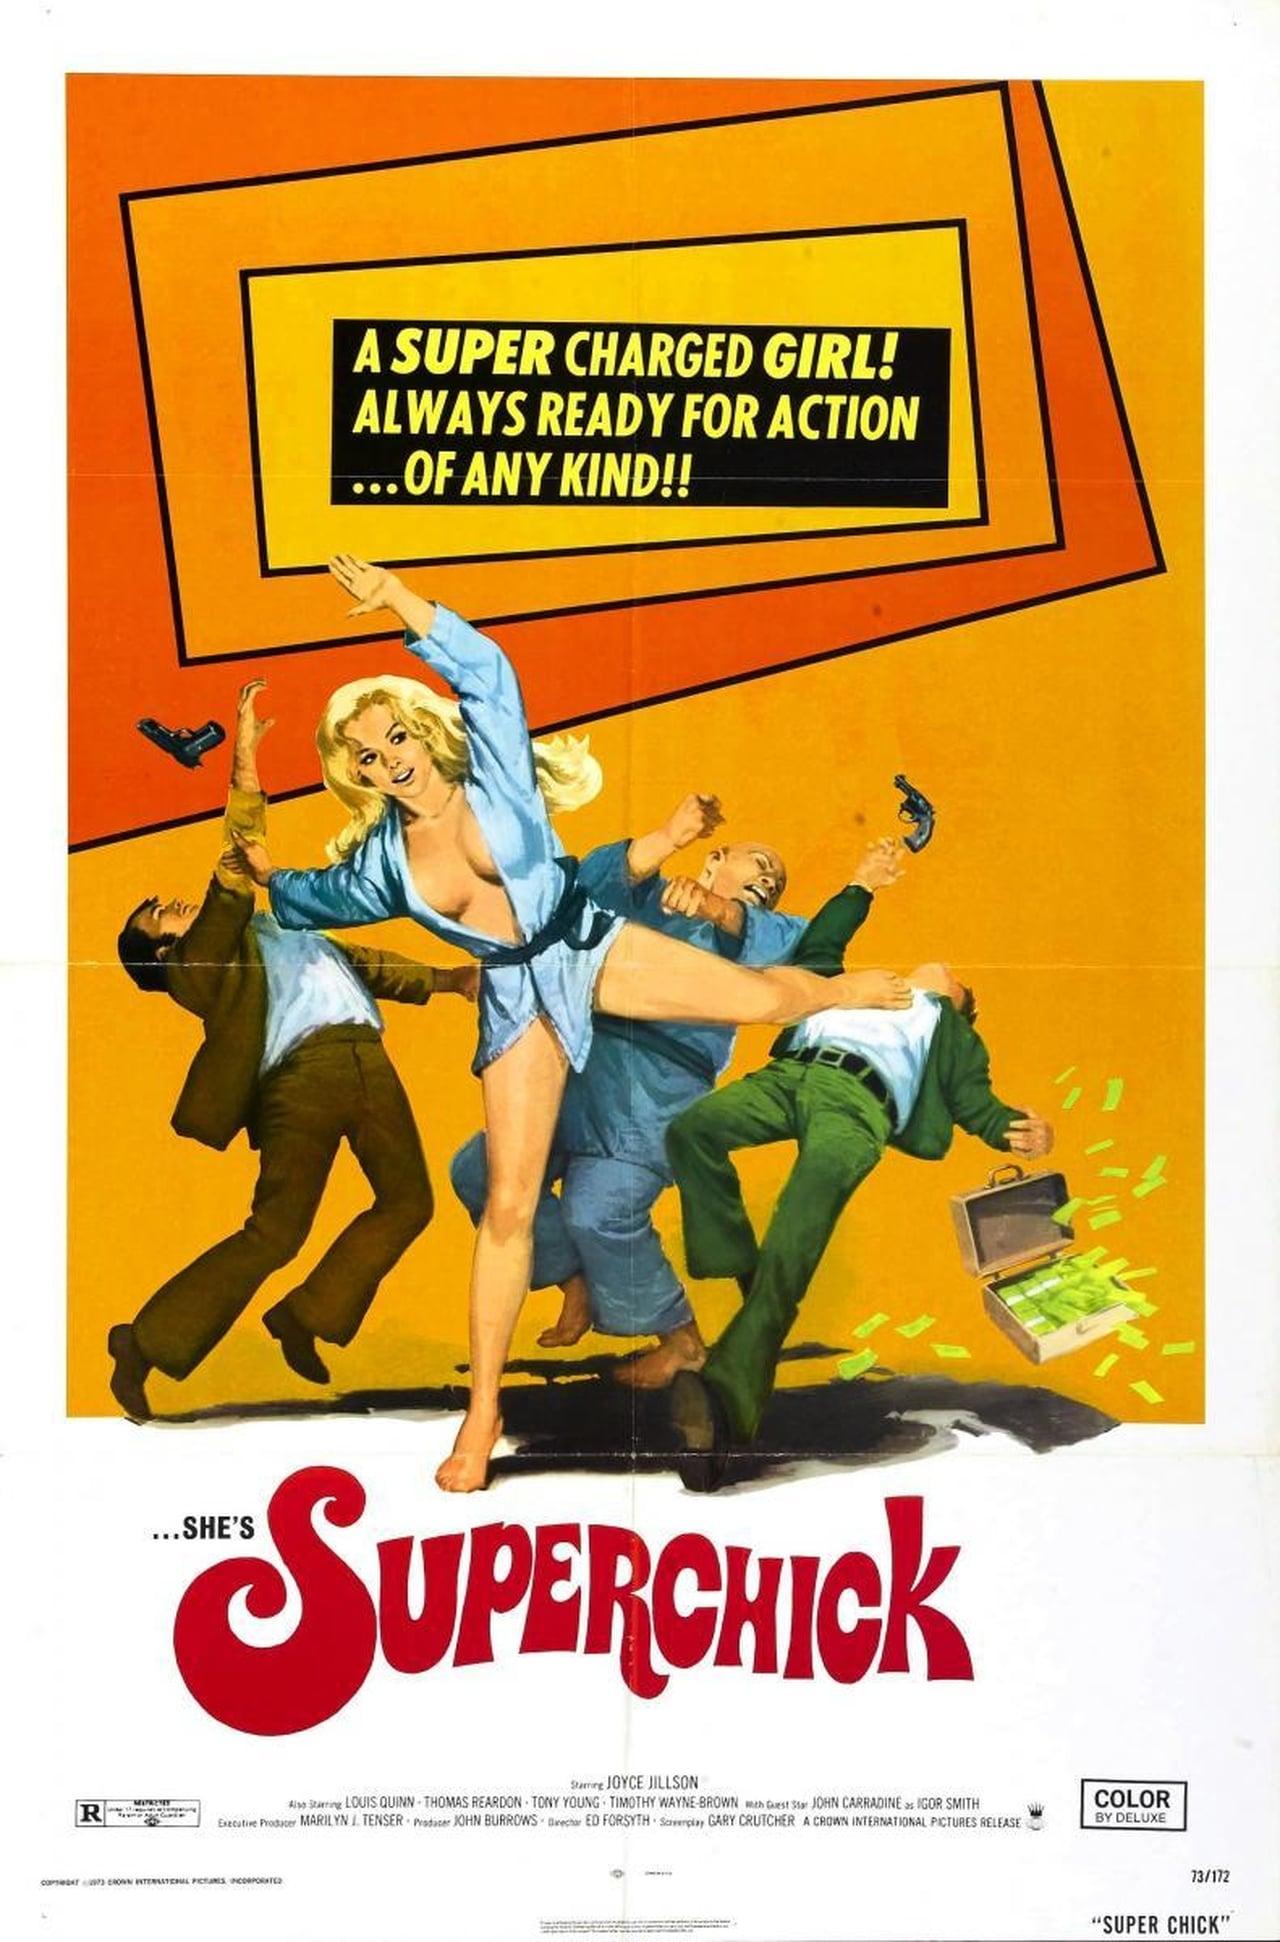 Superchick poster